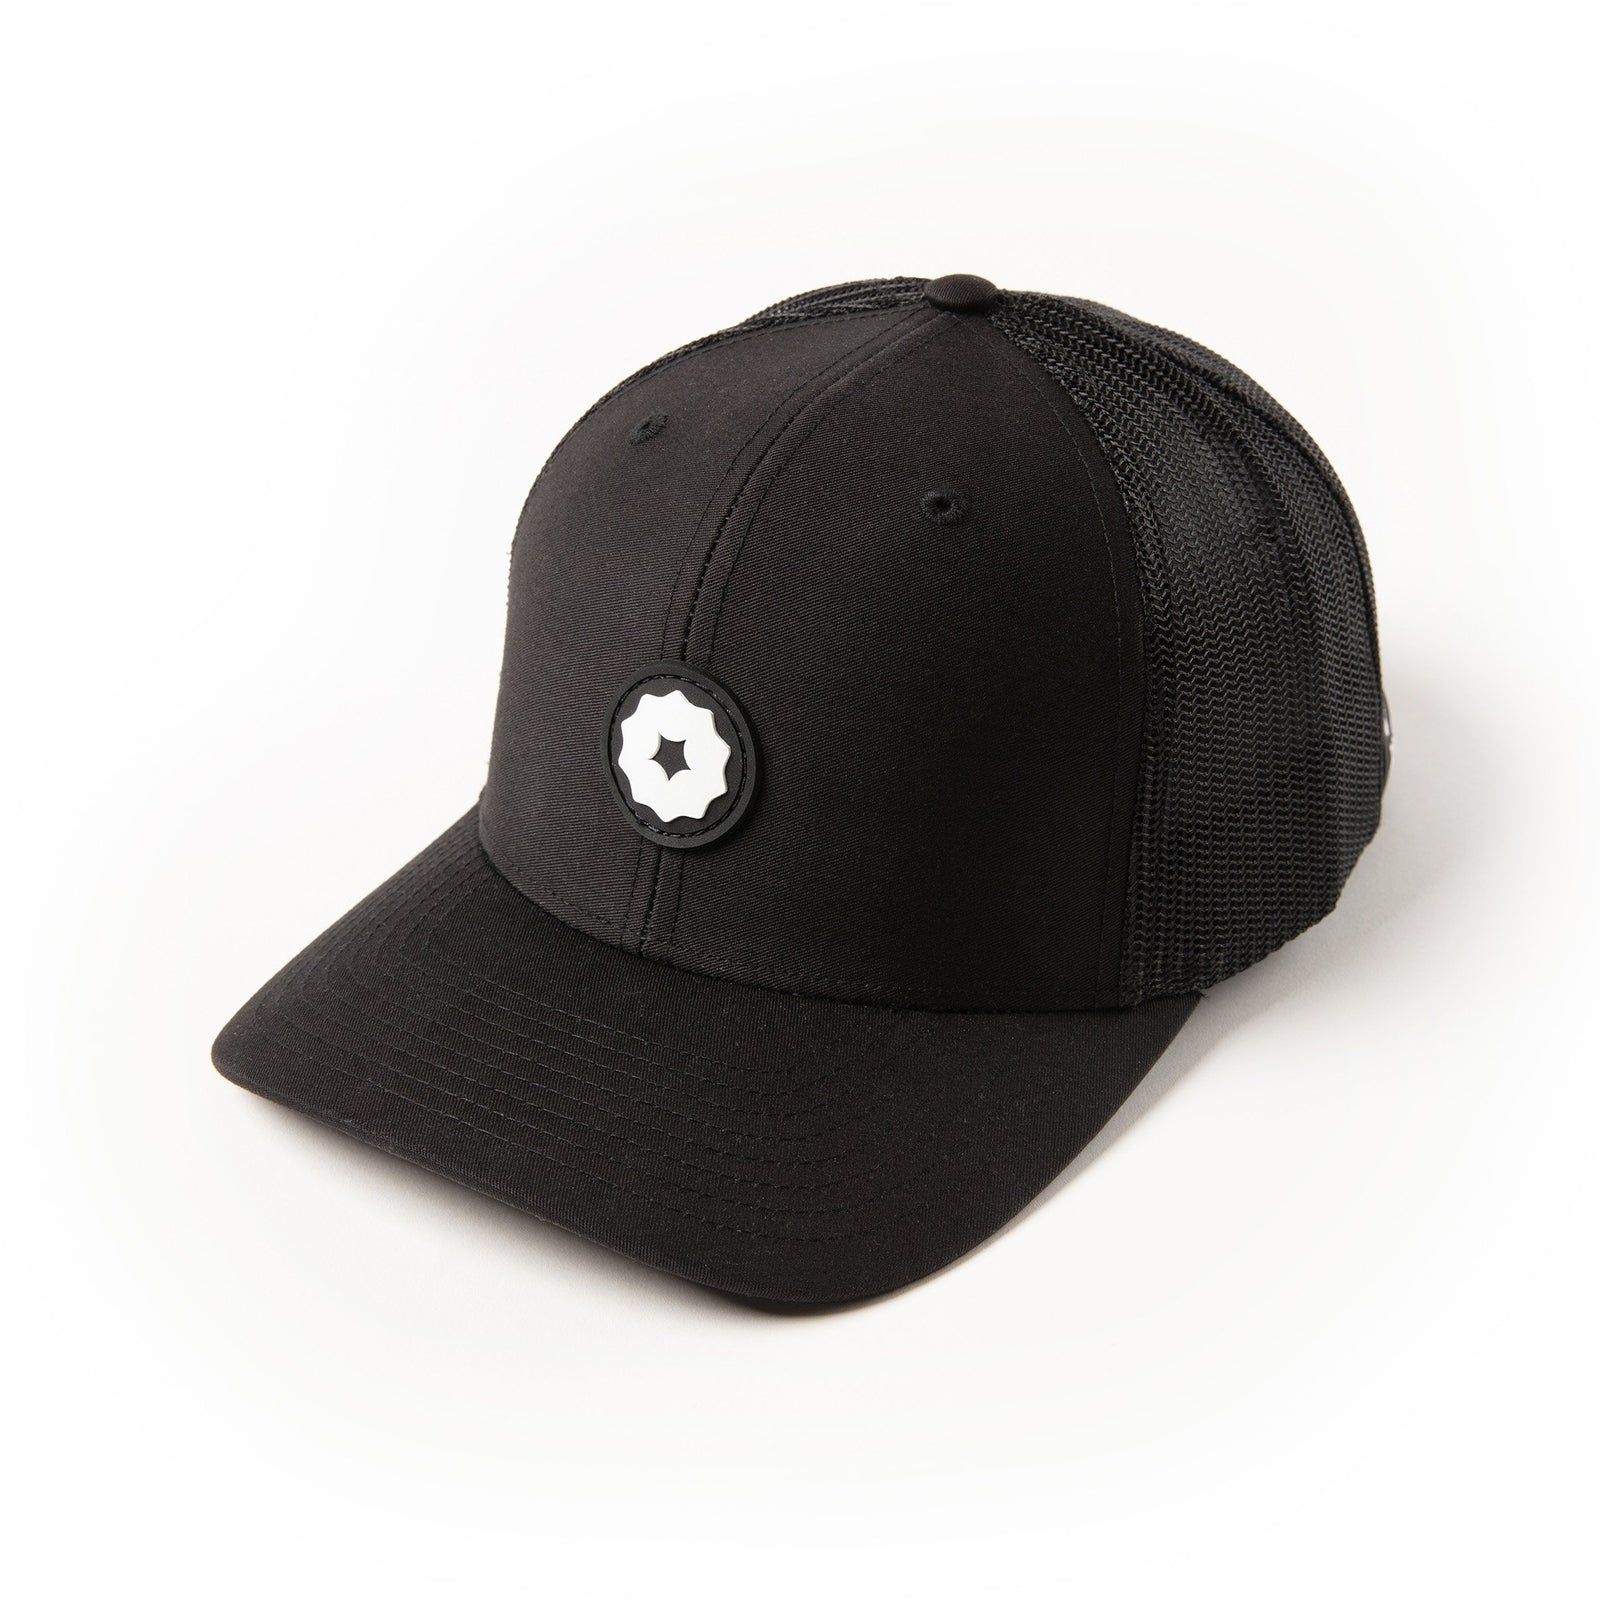 Bently Nevada Tan Cotton Adjustable Baseball Cap Hat CH24